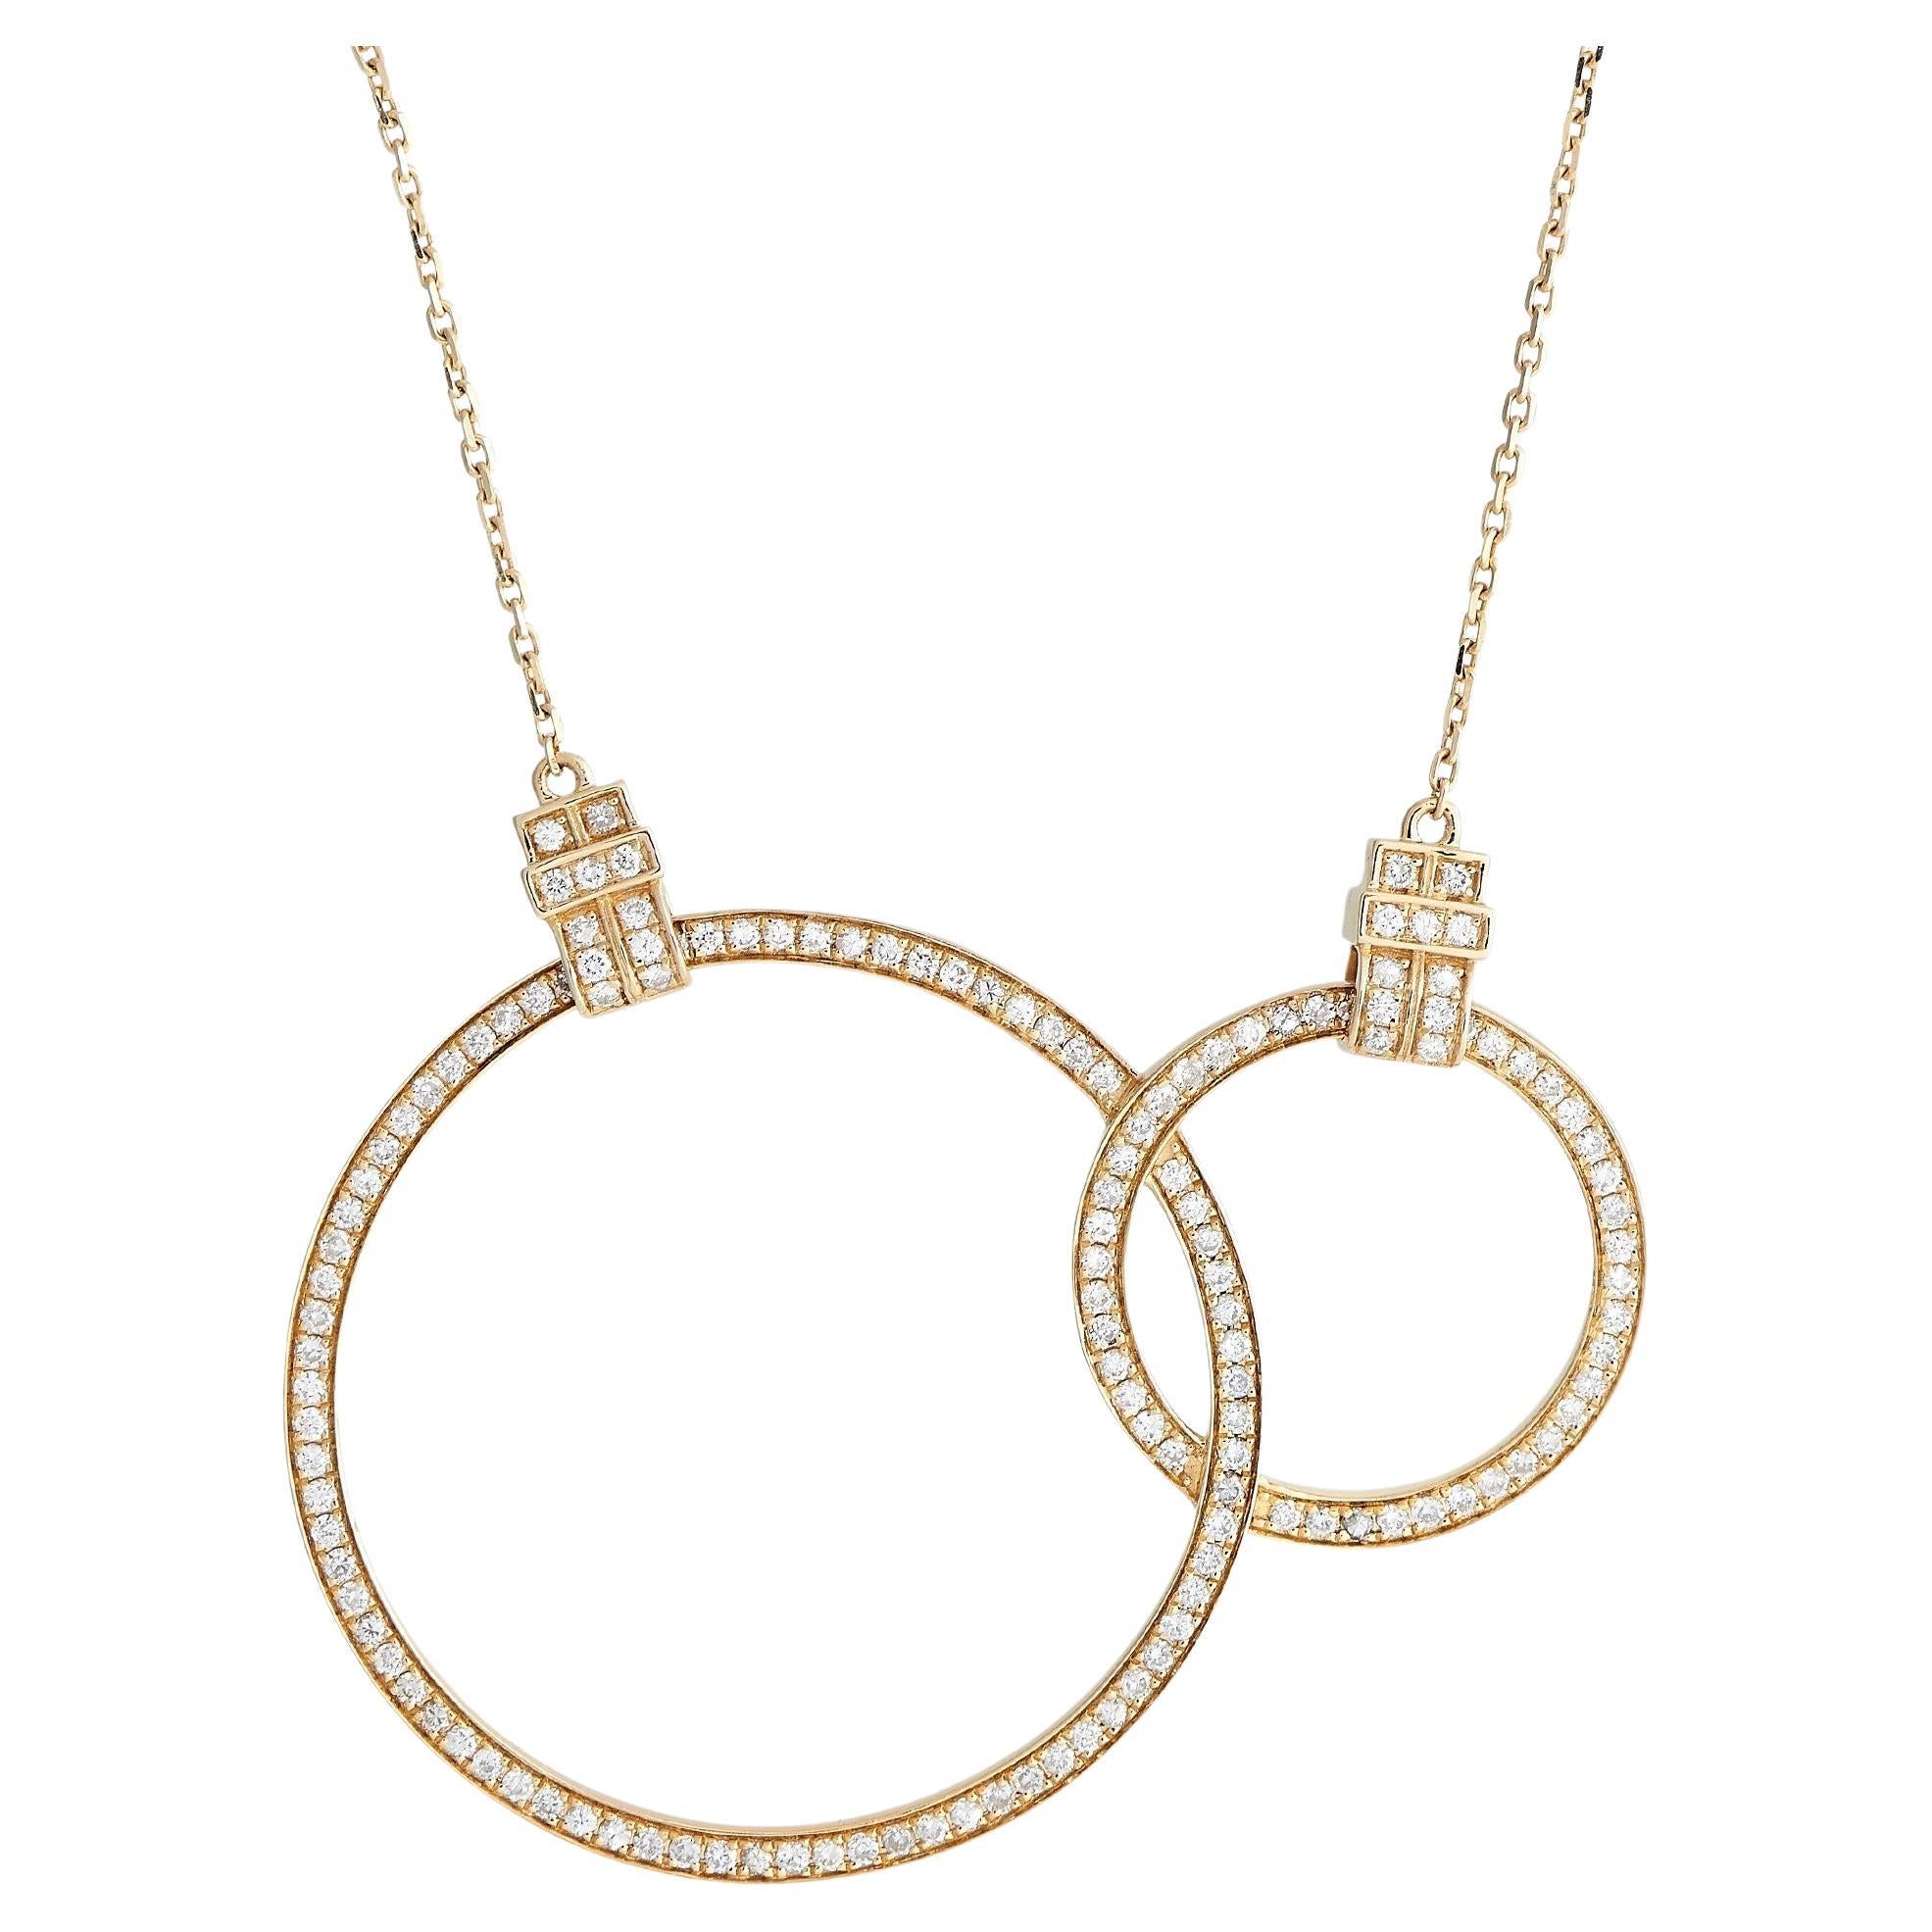 Sold at Auction: 14k YG WG Diamond Louis Vuitton Pendant Necklace